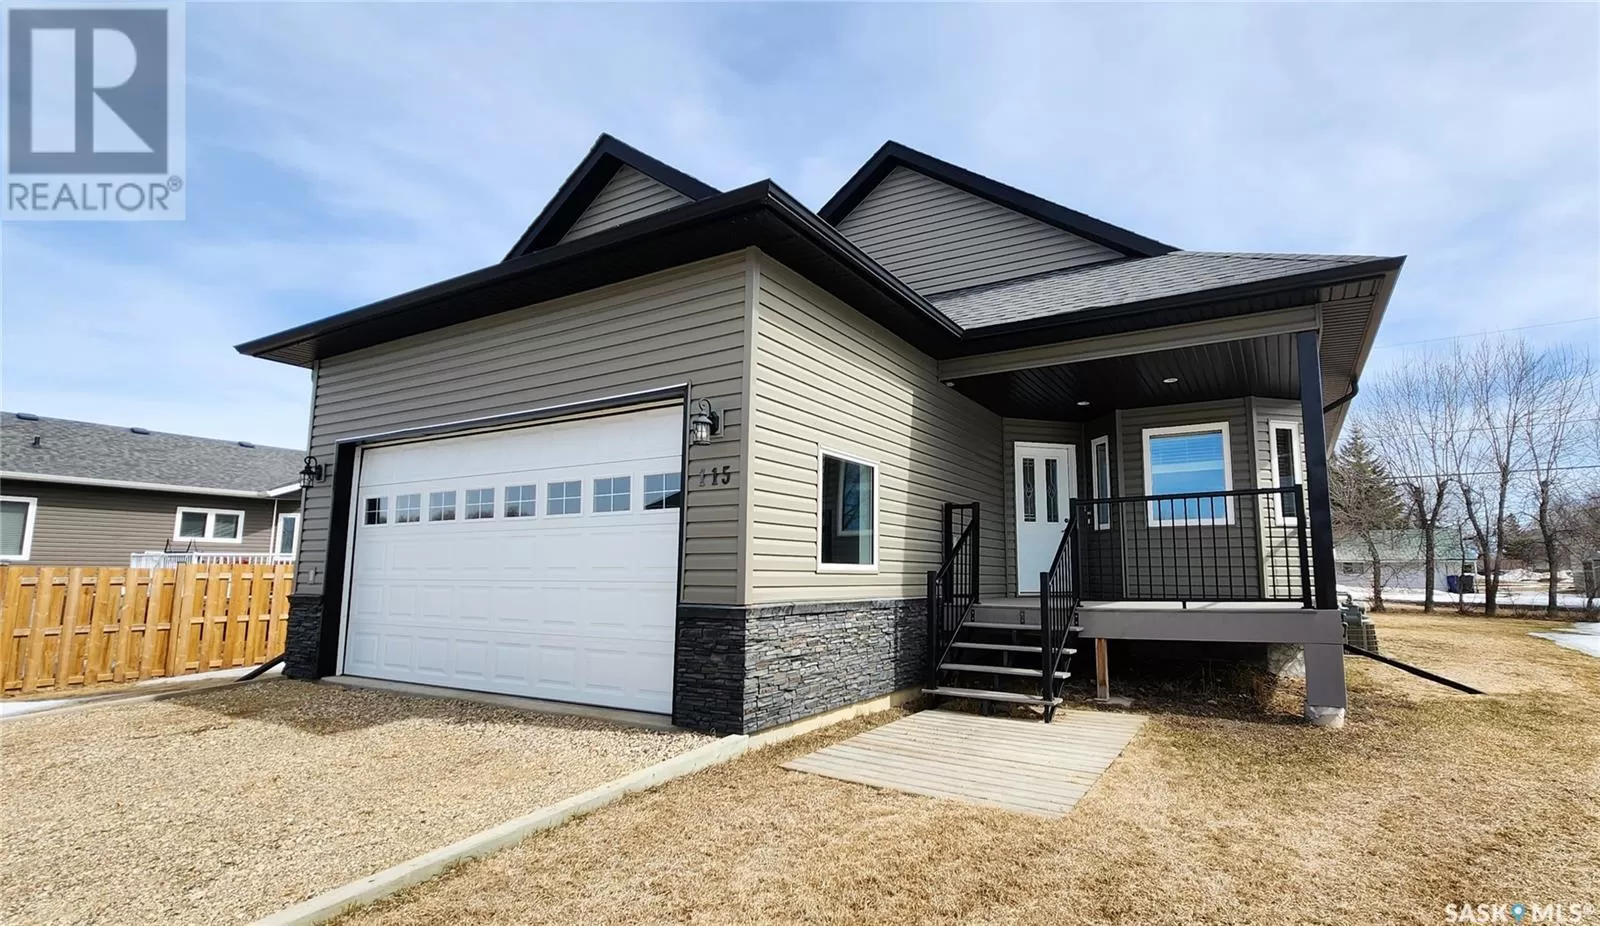 House for rent: 115 Anne Street, Wawota, Saskatchewan S0G 4A0